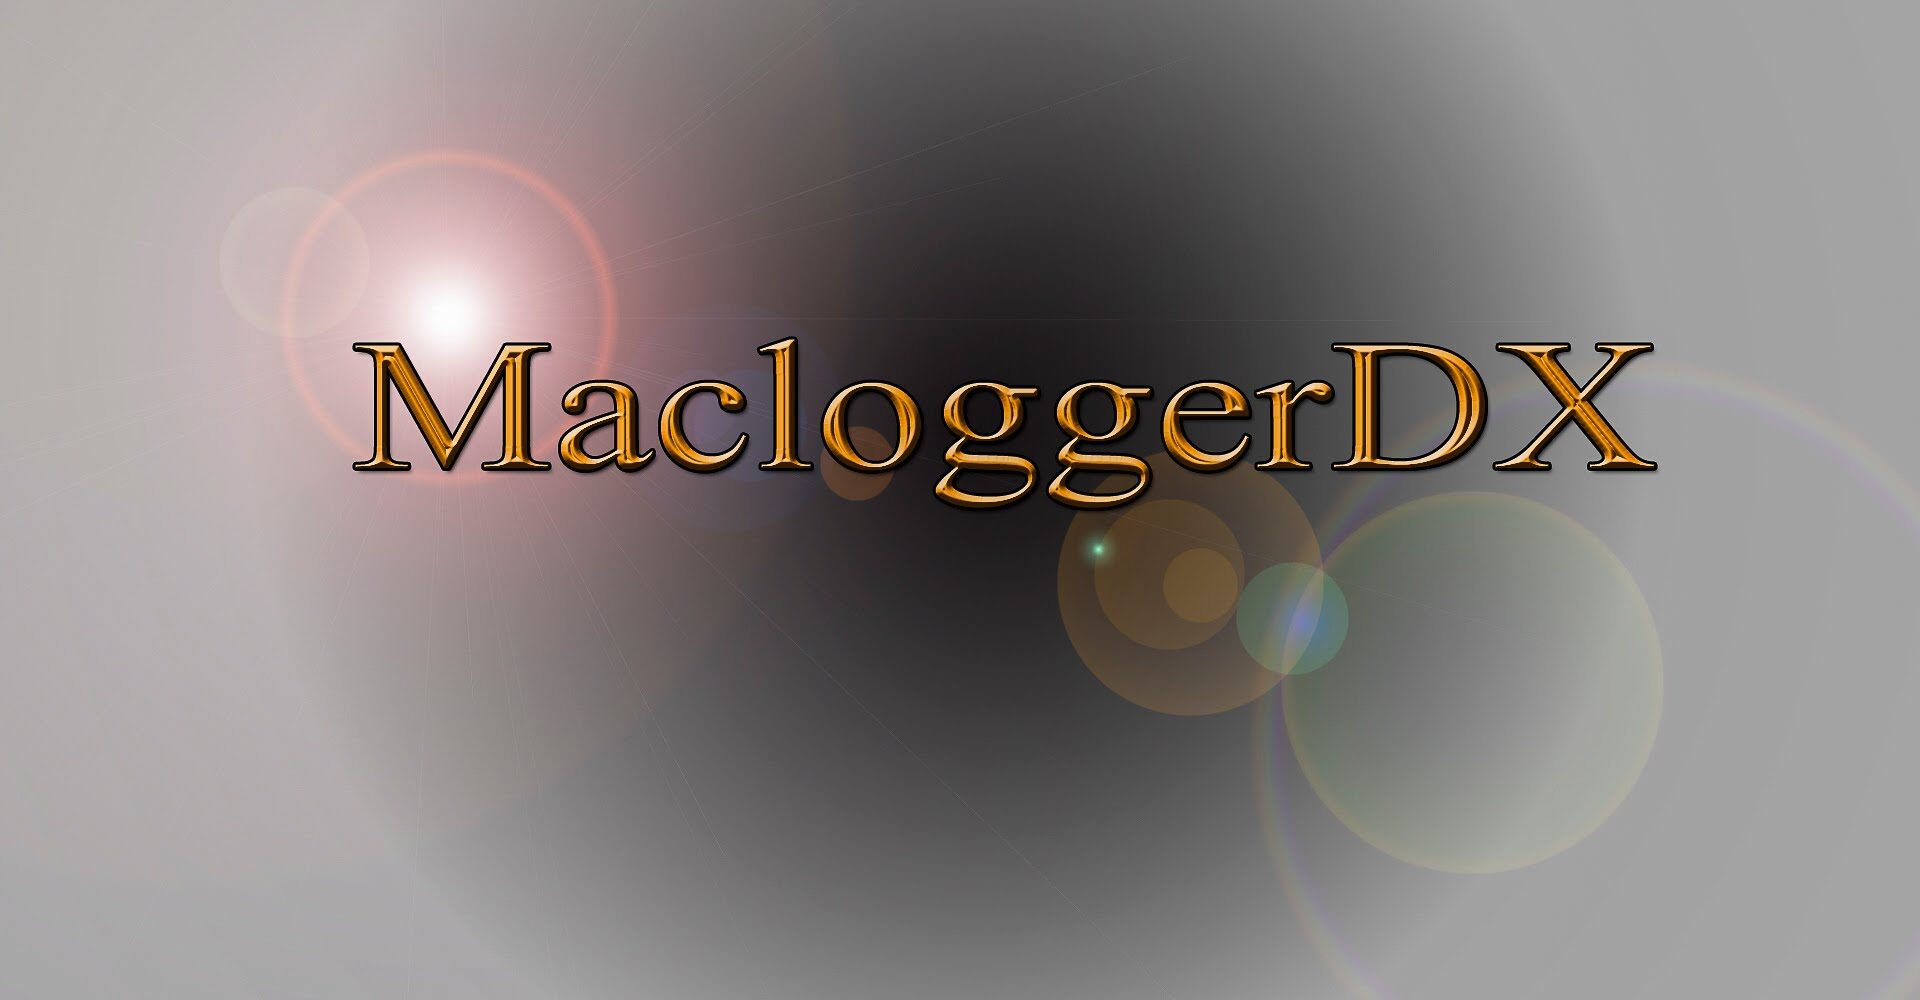 maclogger dx